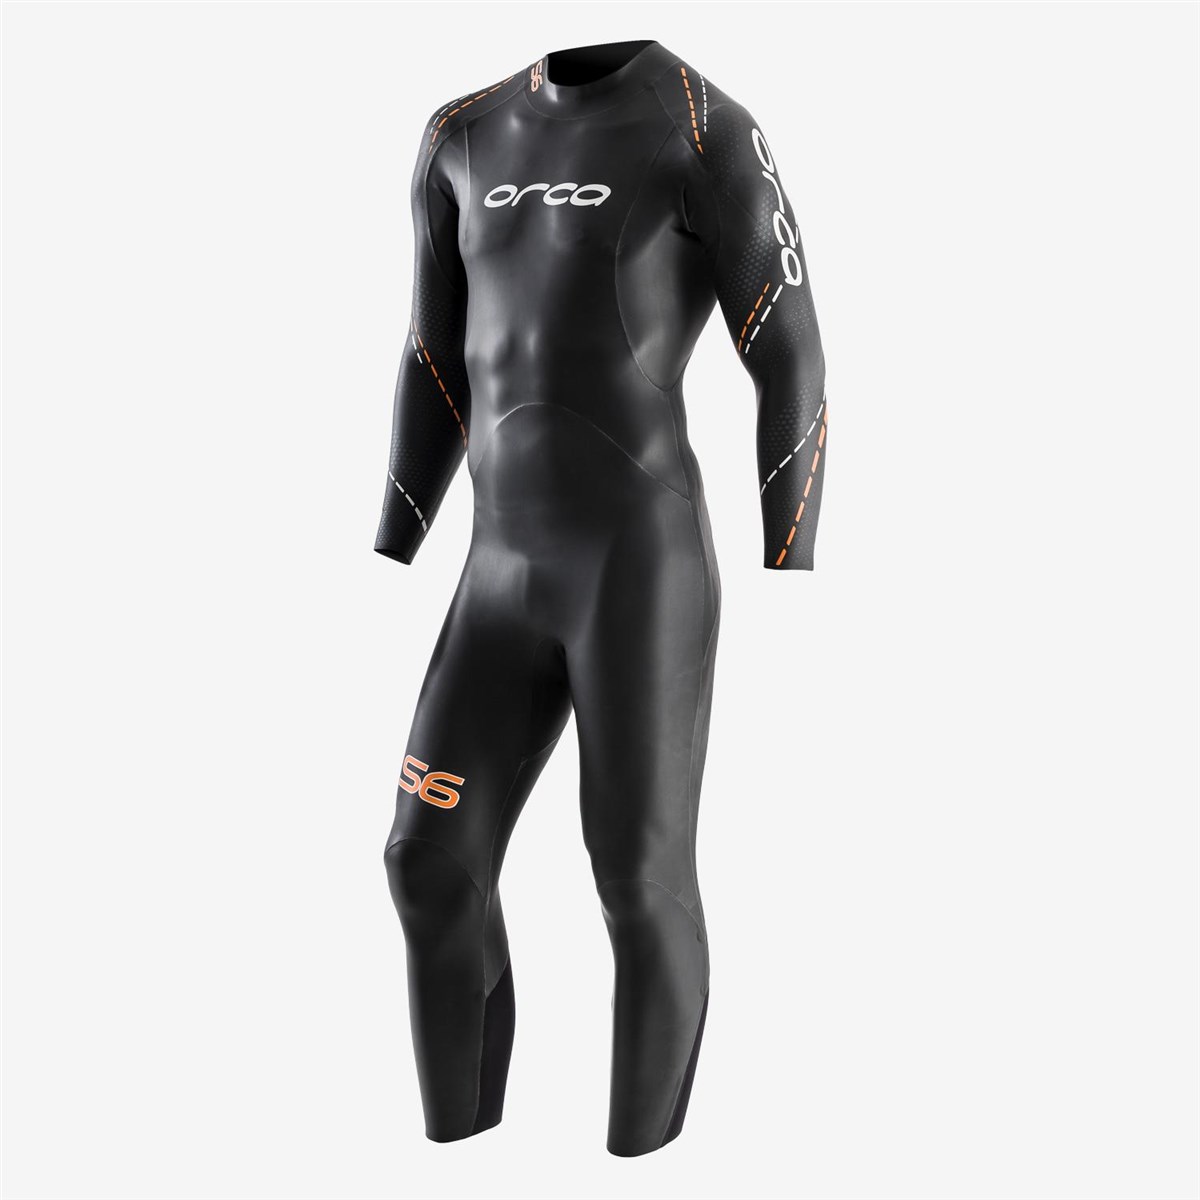 Orca S6 Full Sleeve Triathlon Wetsuit product image